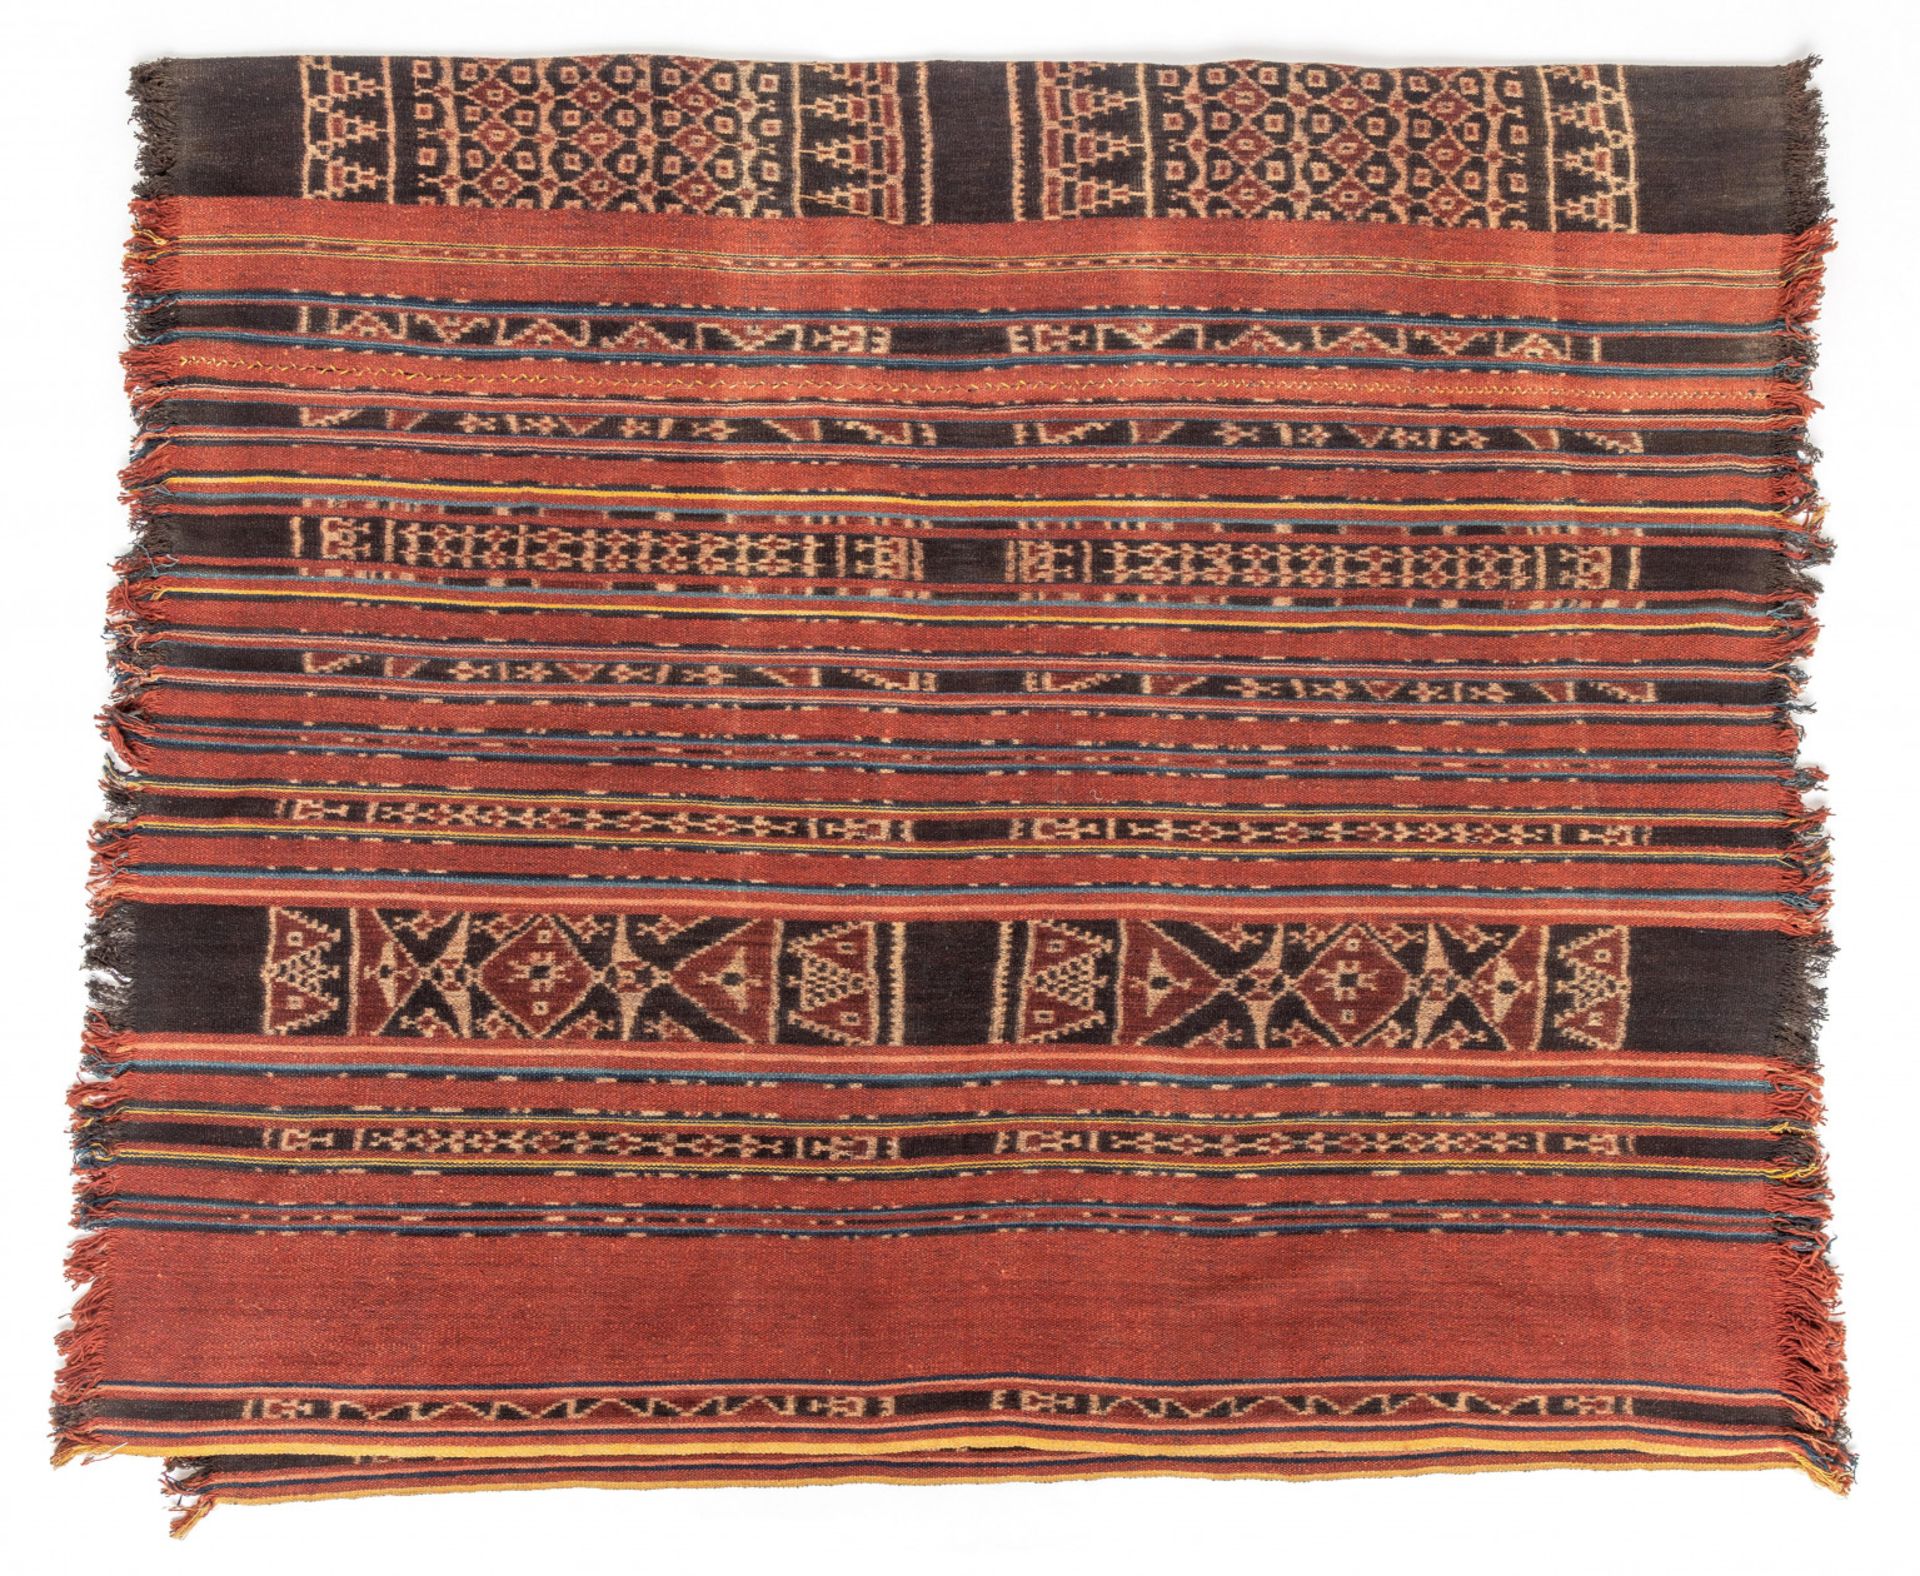 Lembata, Ata dei, ceremonial sarong, kewatek nai telo